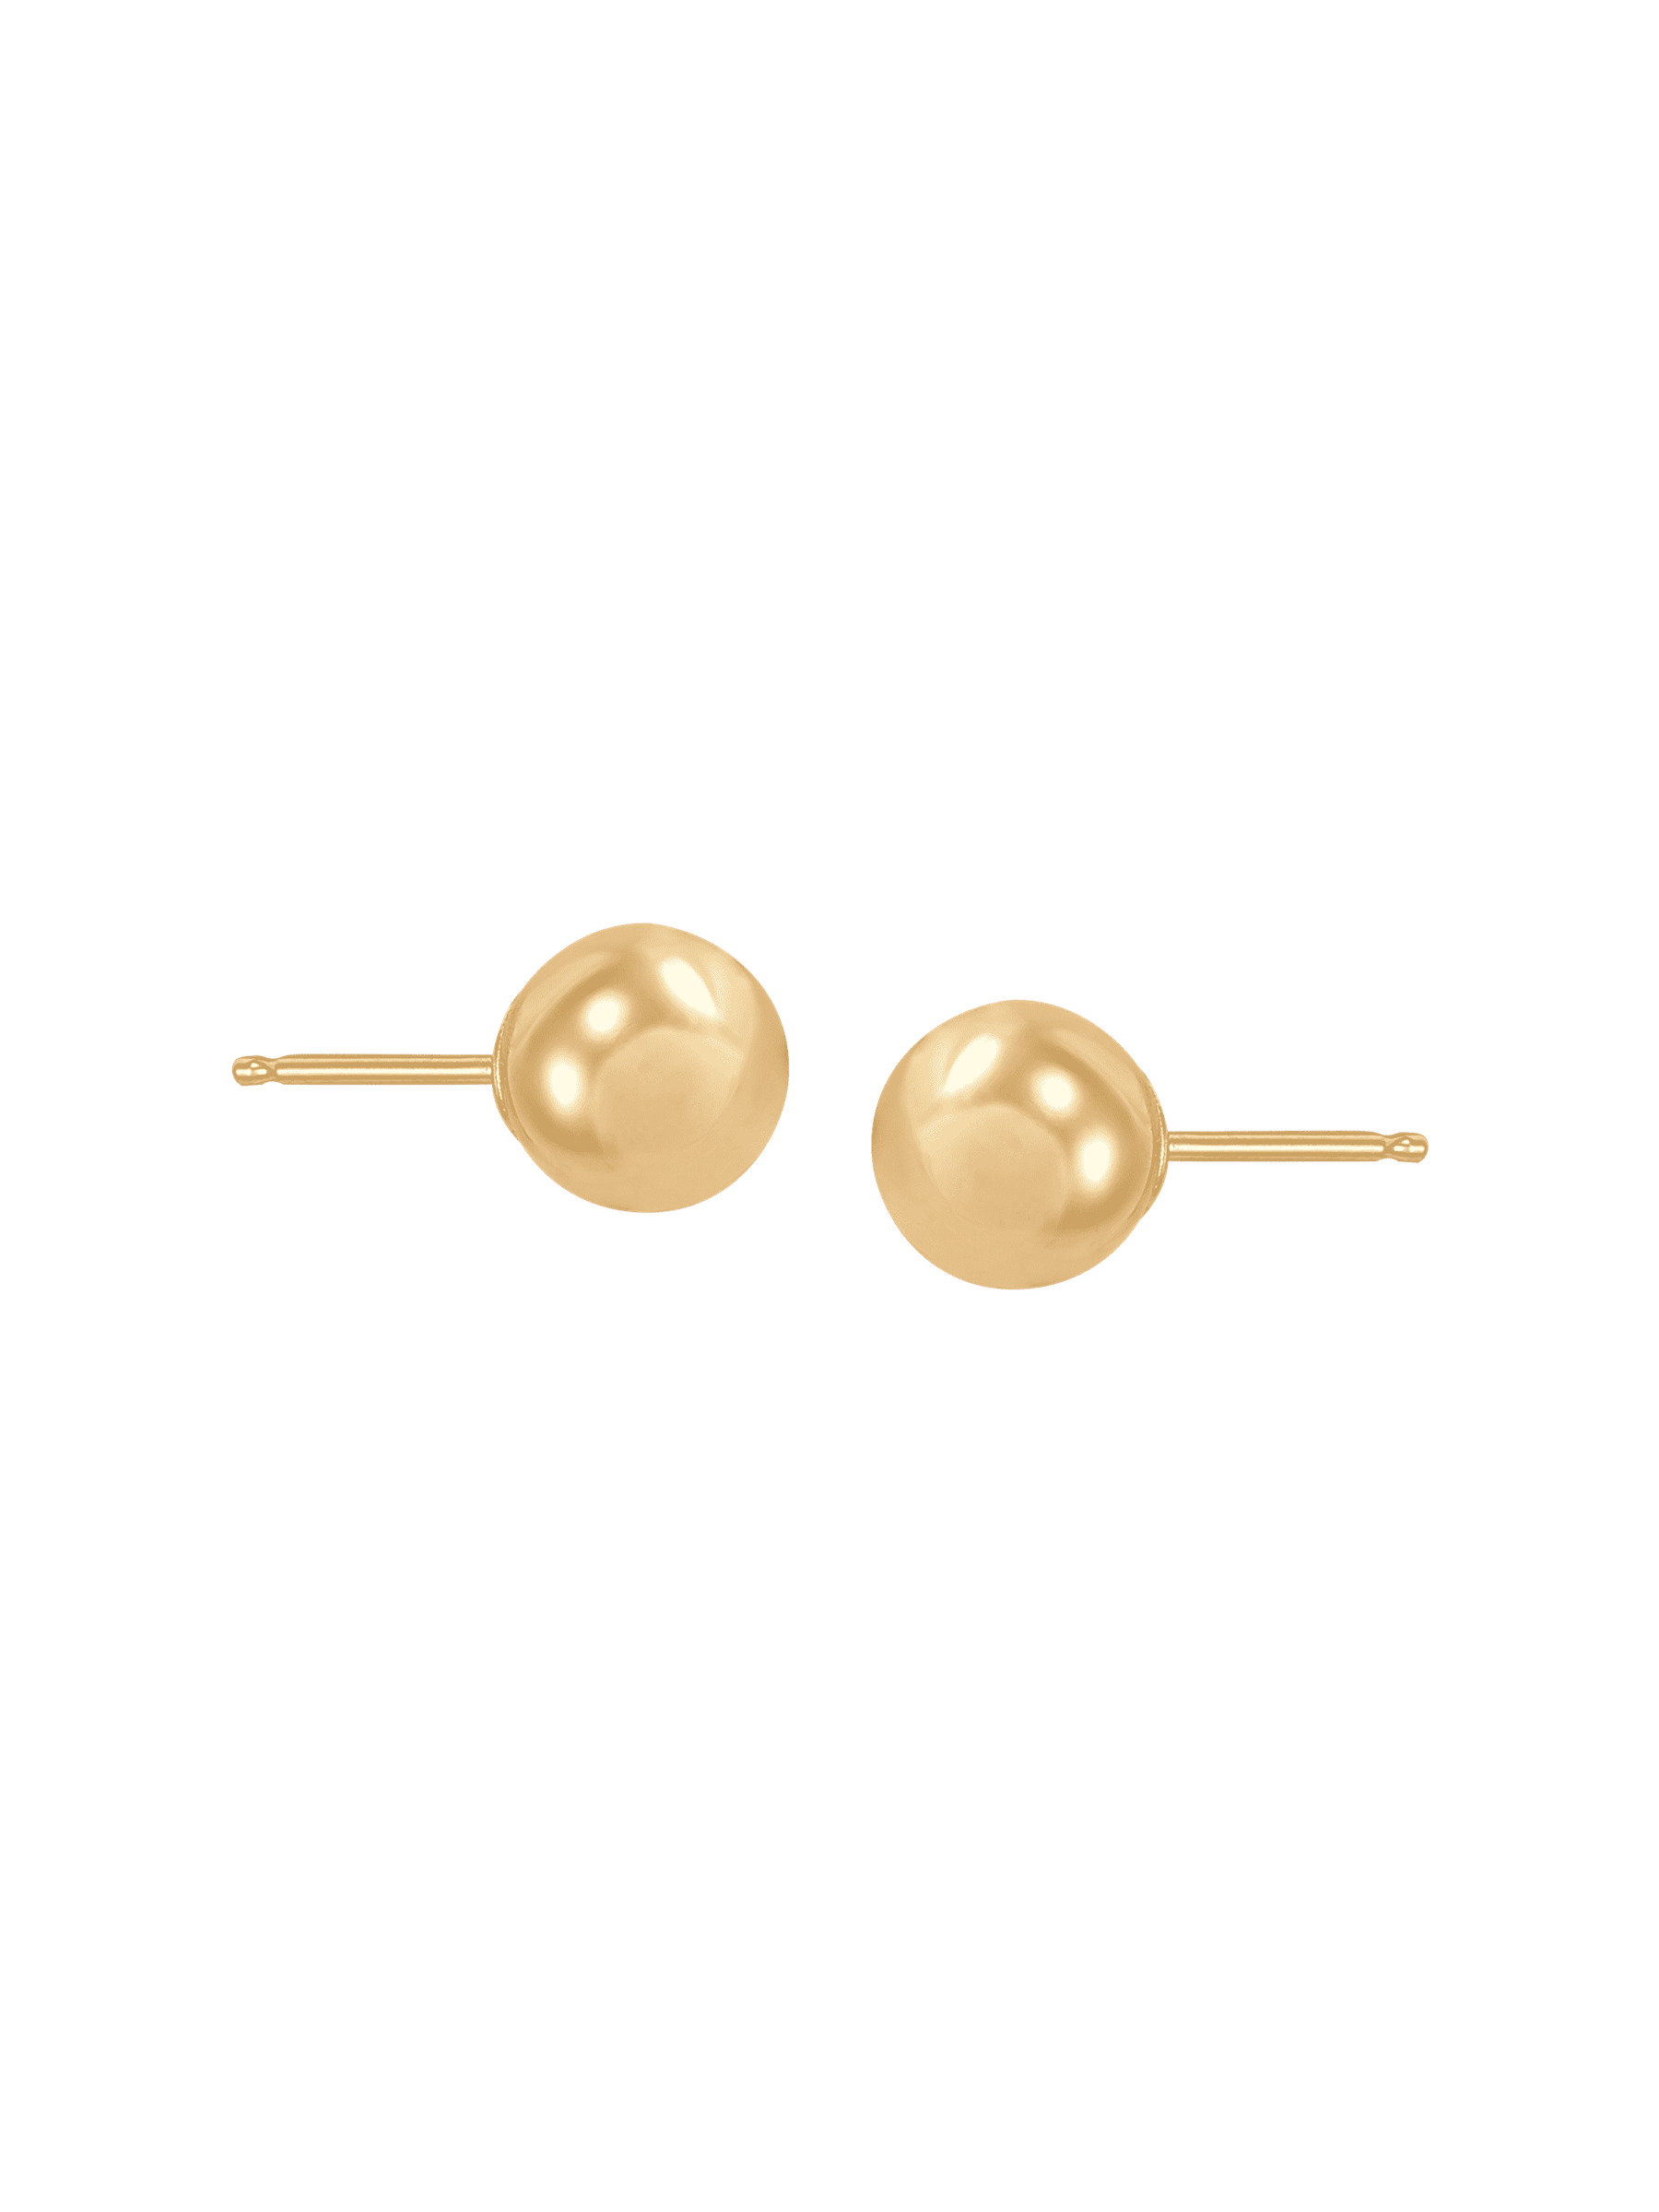 Women's Finecraft 6mm Ball Stud Earrings in 14kt Yellow Gold - image 2 of 5